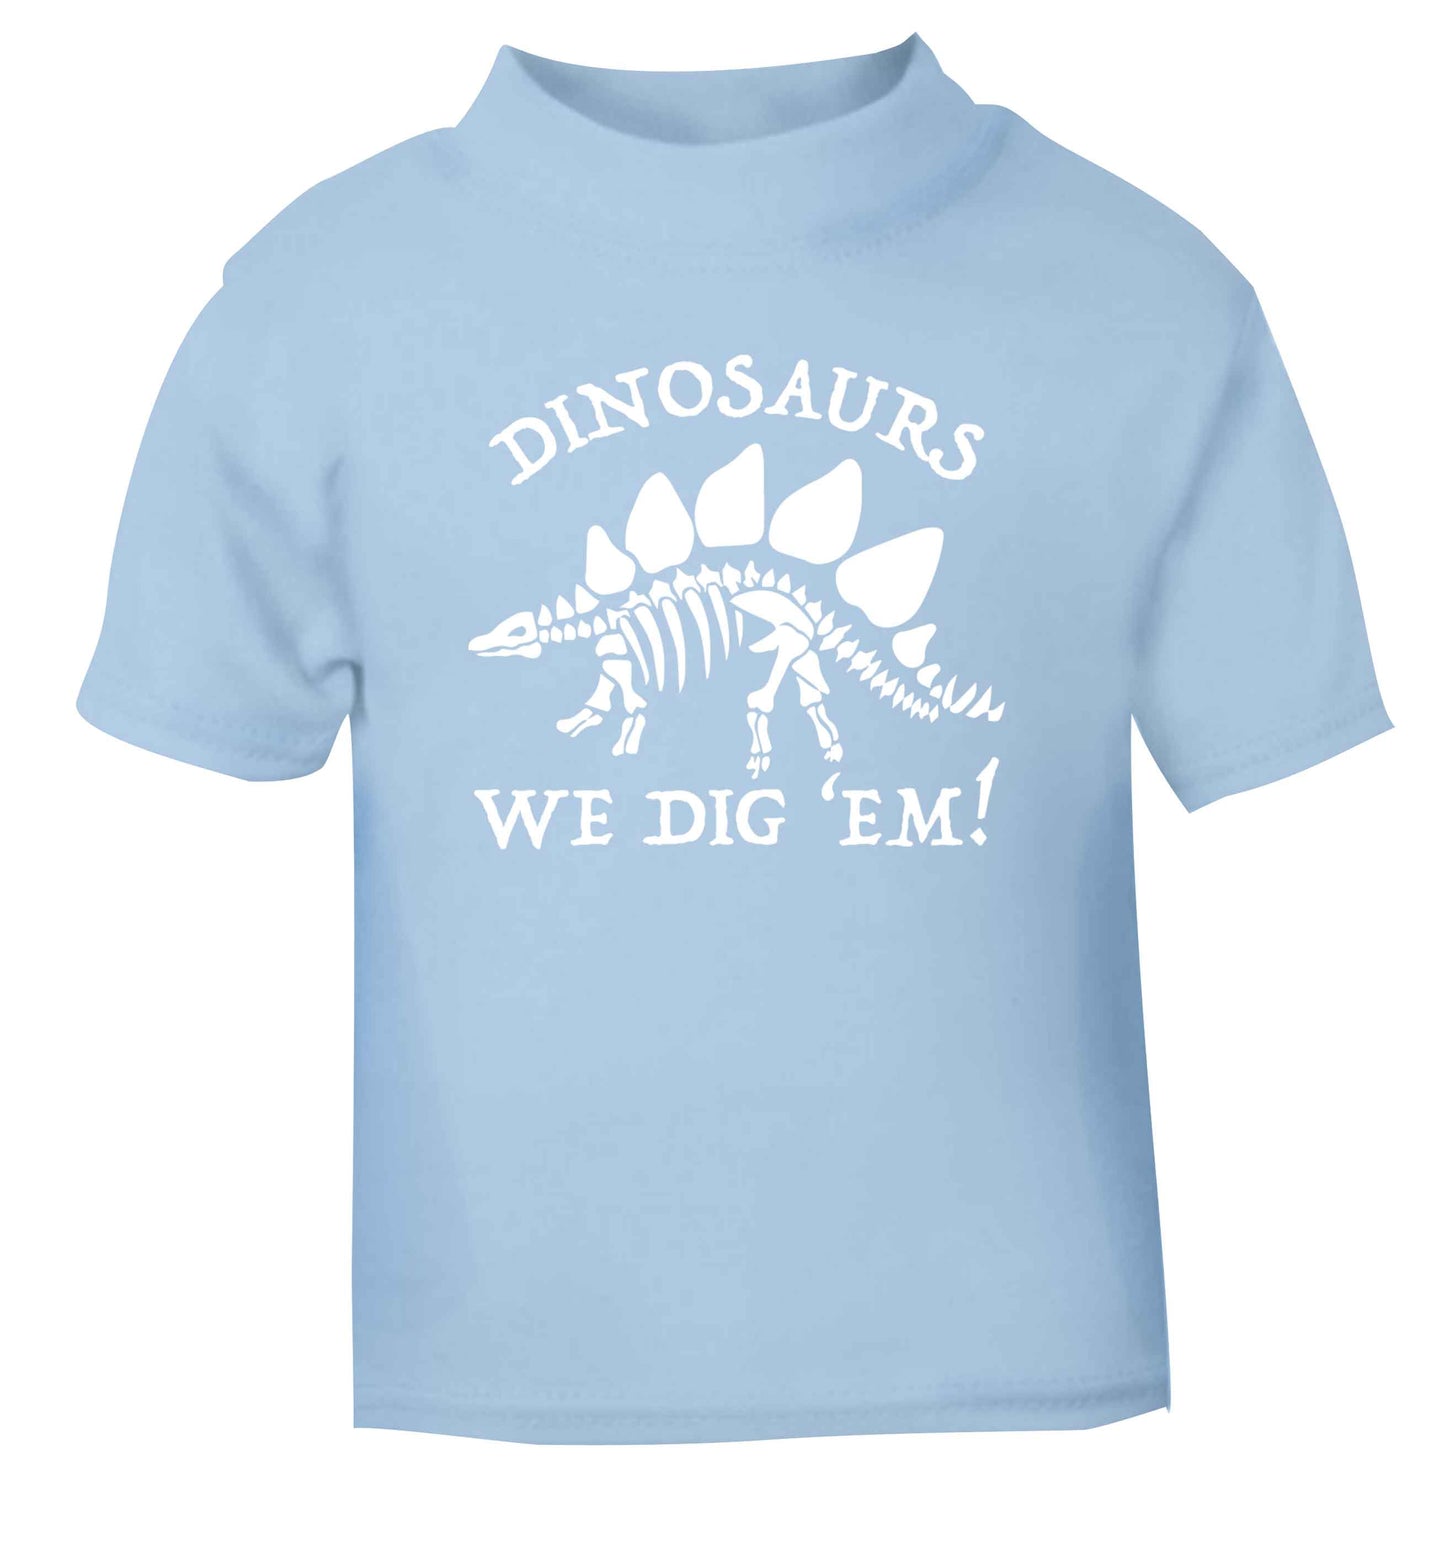 Dinosaurs we dig 'em! light blue Baby Toddler Tshirt 2 Years